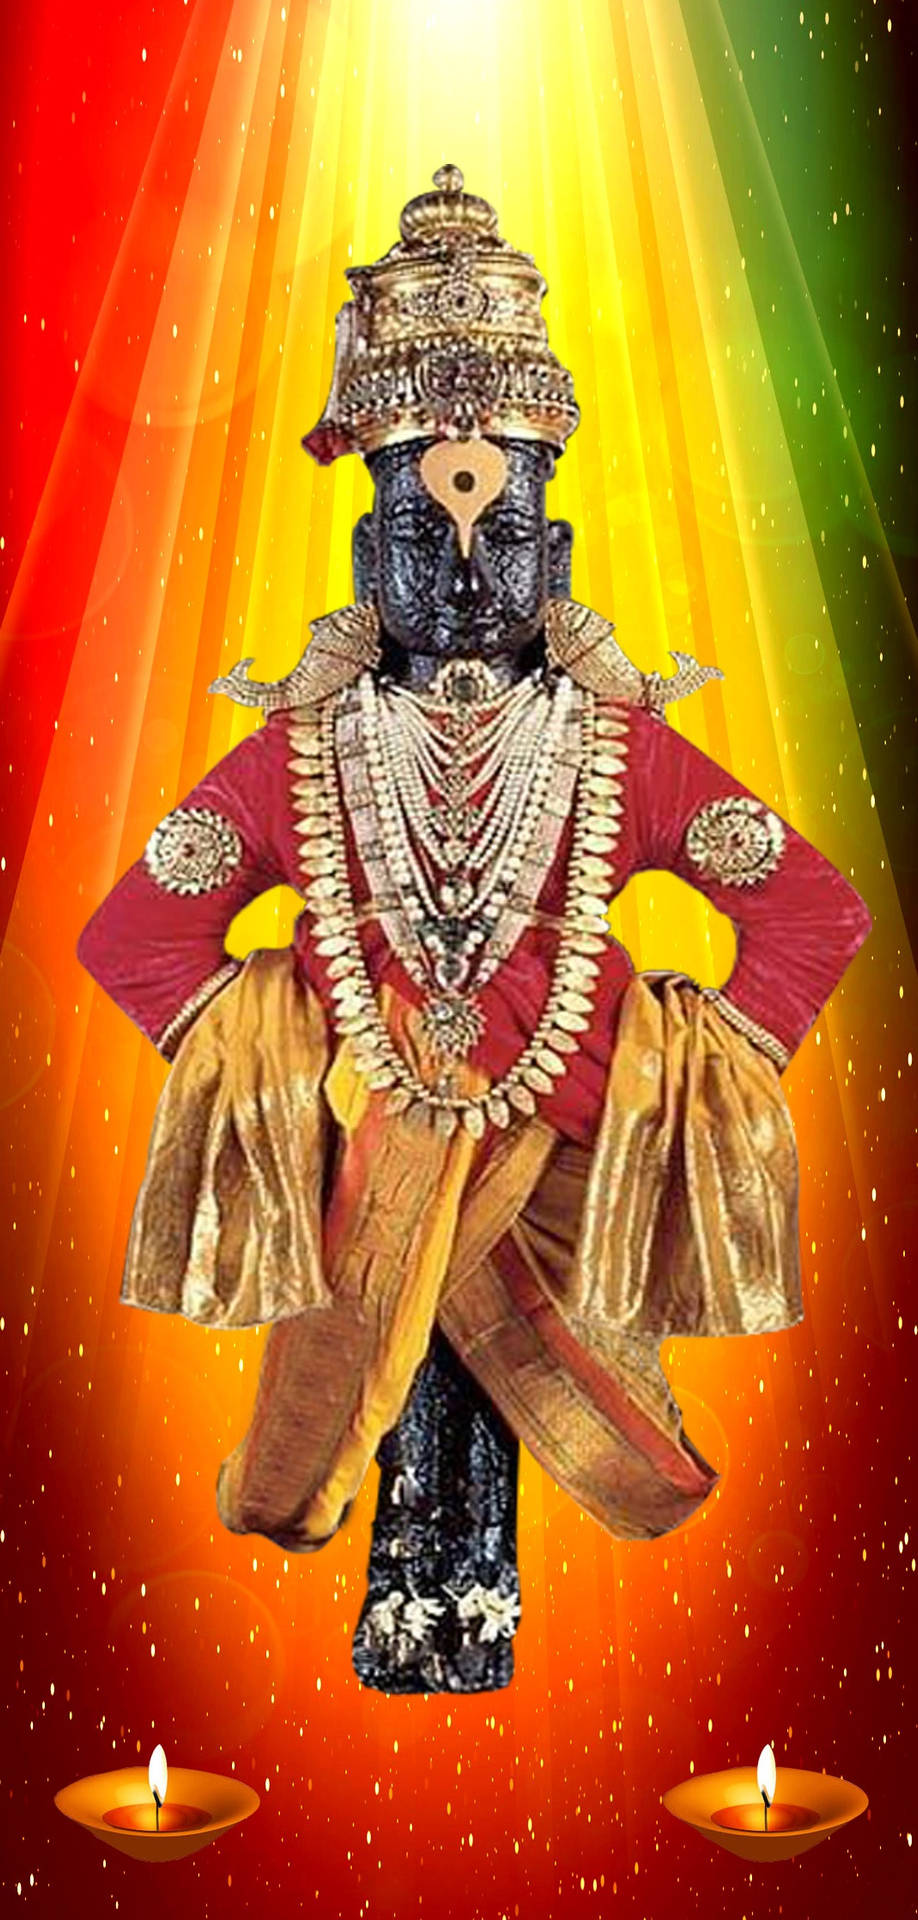 Caption: Devotion in Vision: Ancient Hindu Deity, Lord Pandurang Wallpaper